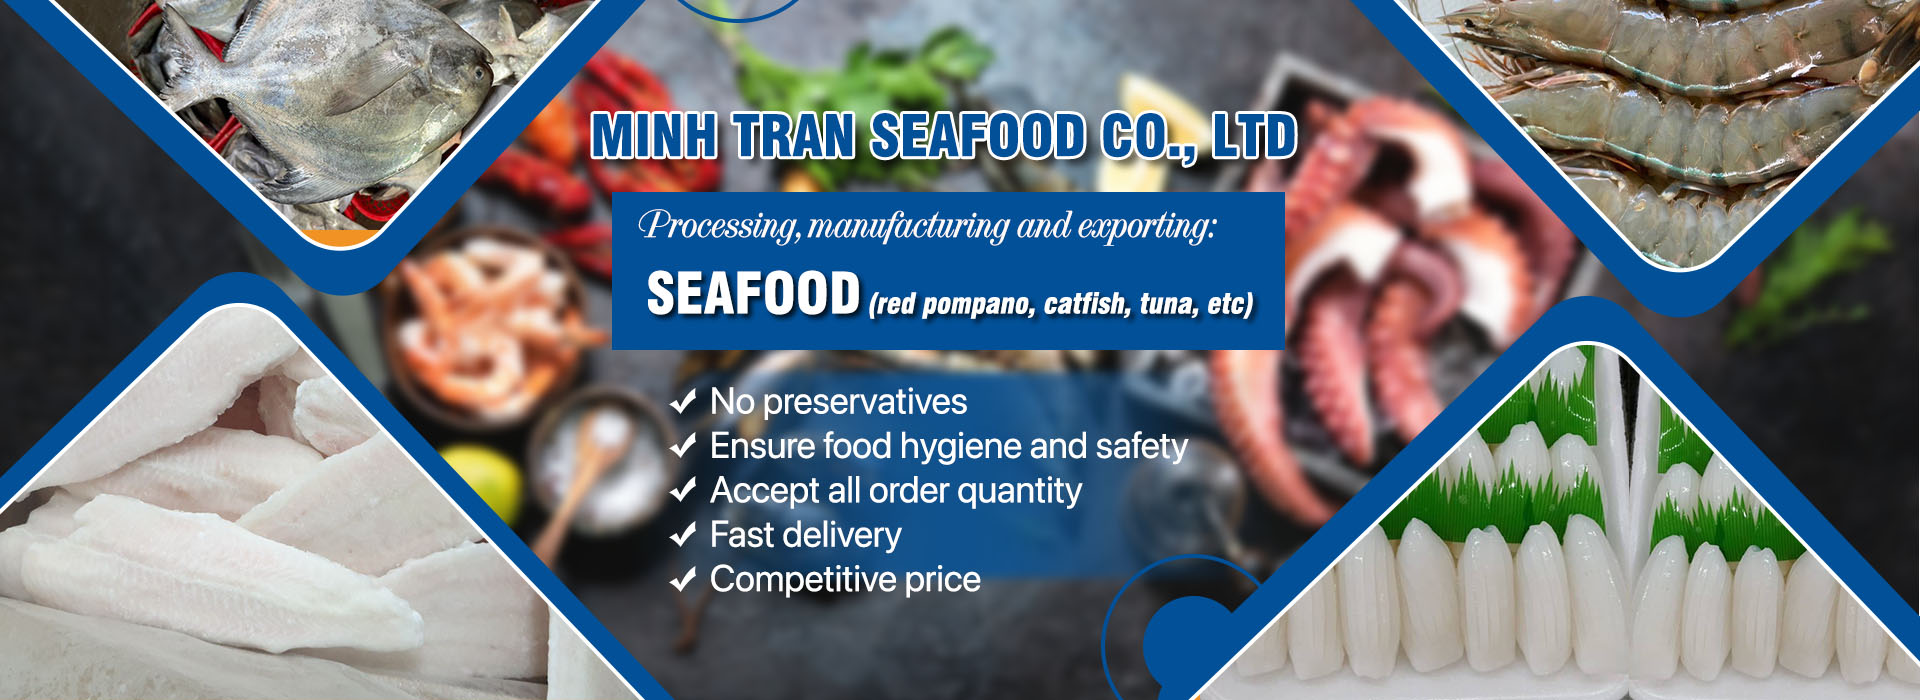 MINH TRAN SEAFOOD COMPANY LIMITED